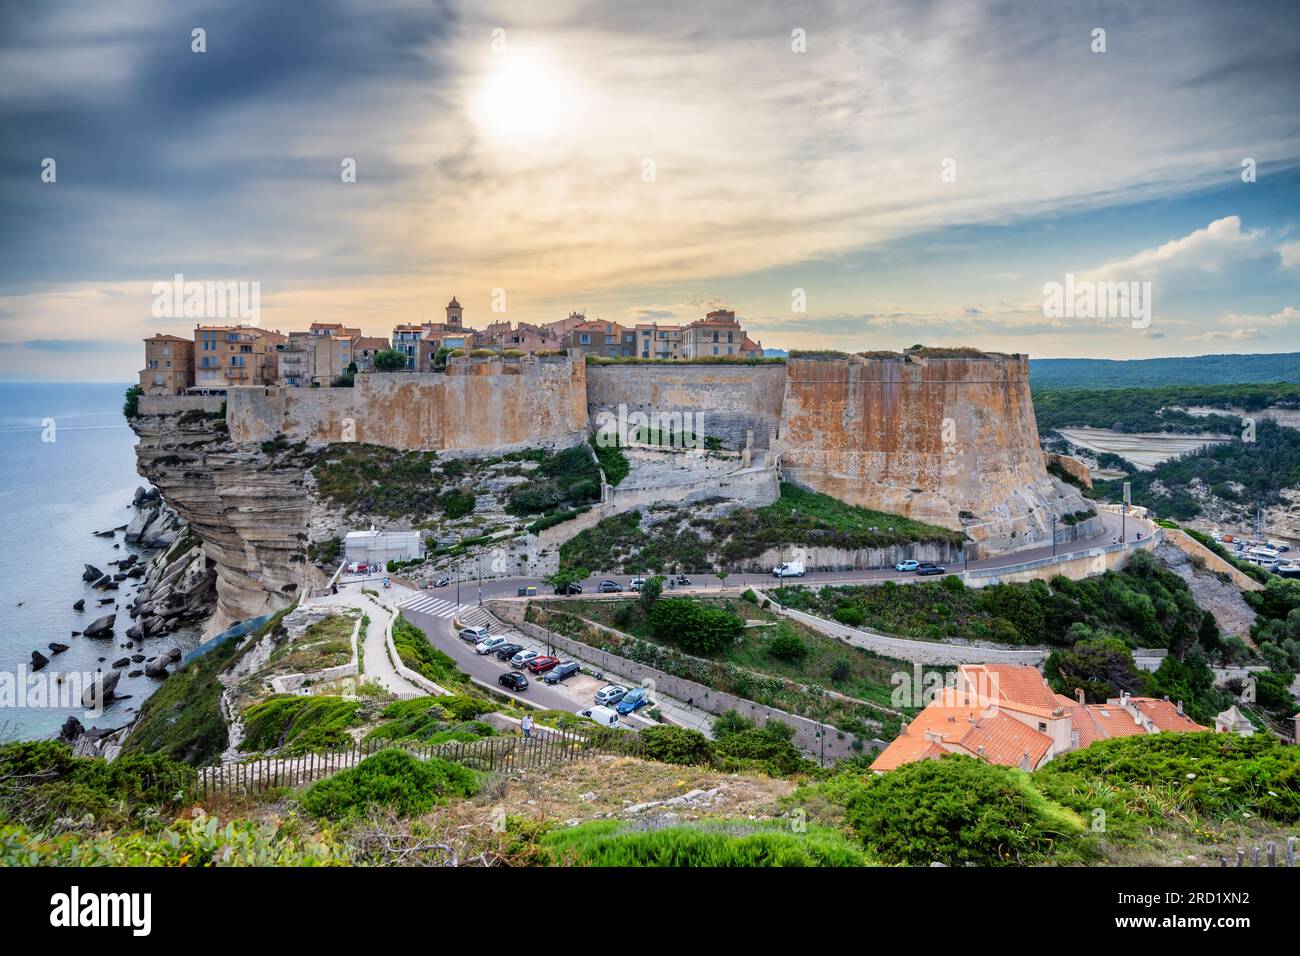 Bonifacio fortress, Corsica island, France Stock Photo